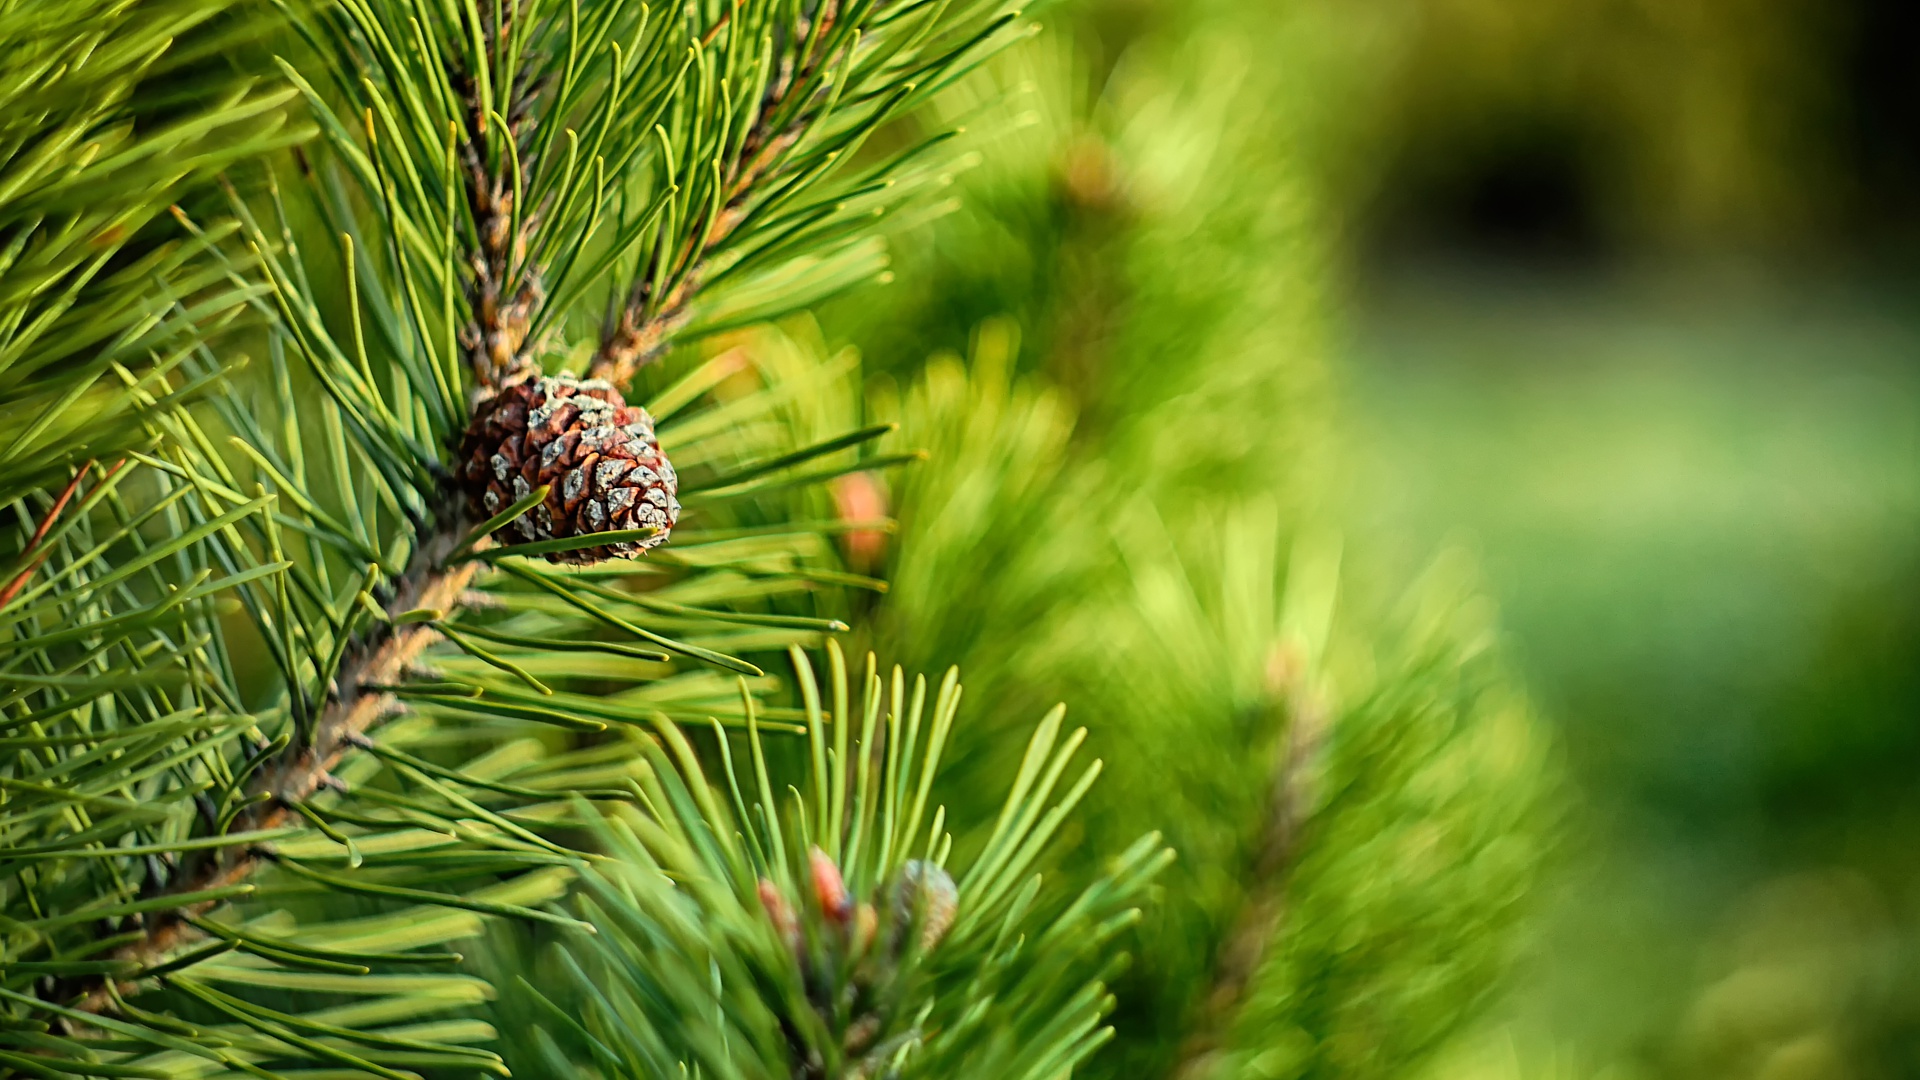 General 1920x1080 macro nature green pine cones pine trees closeup depth of field trees photography vibrant